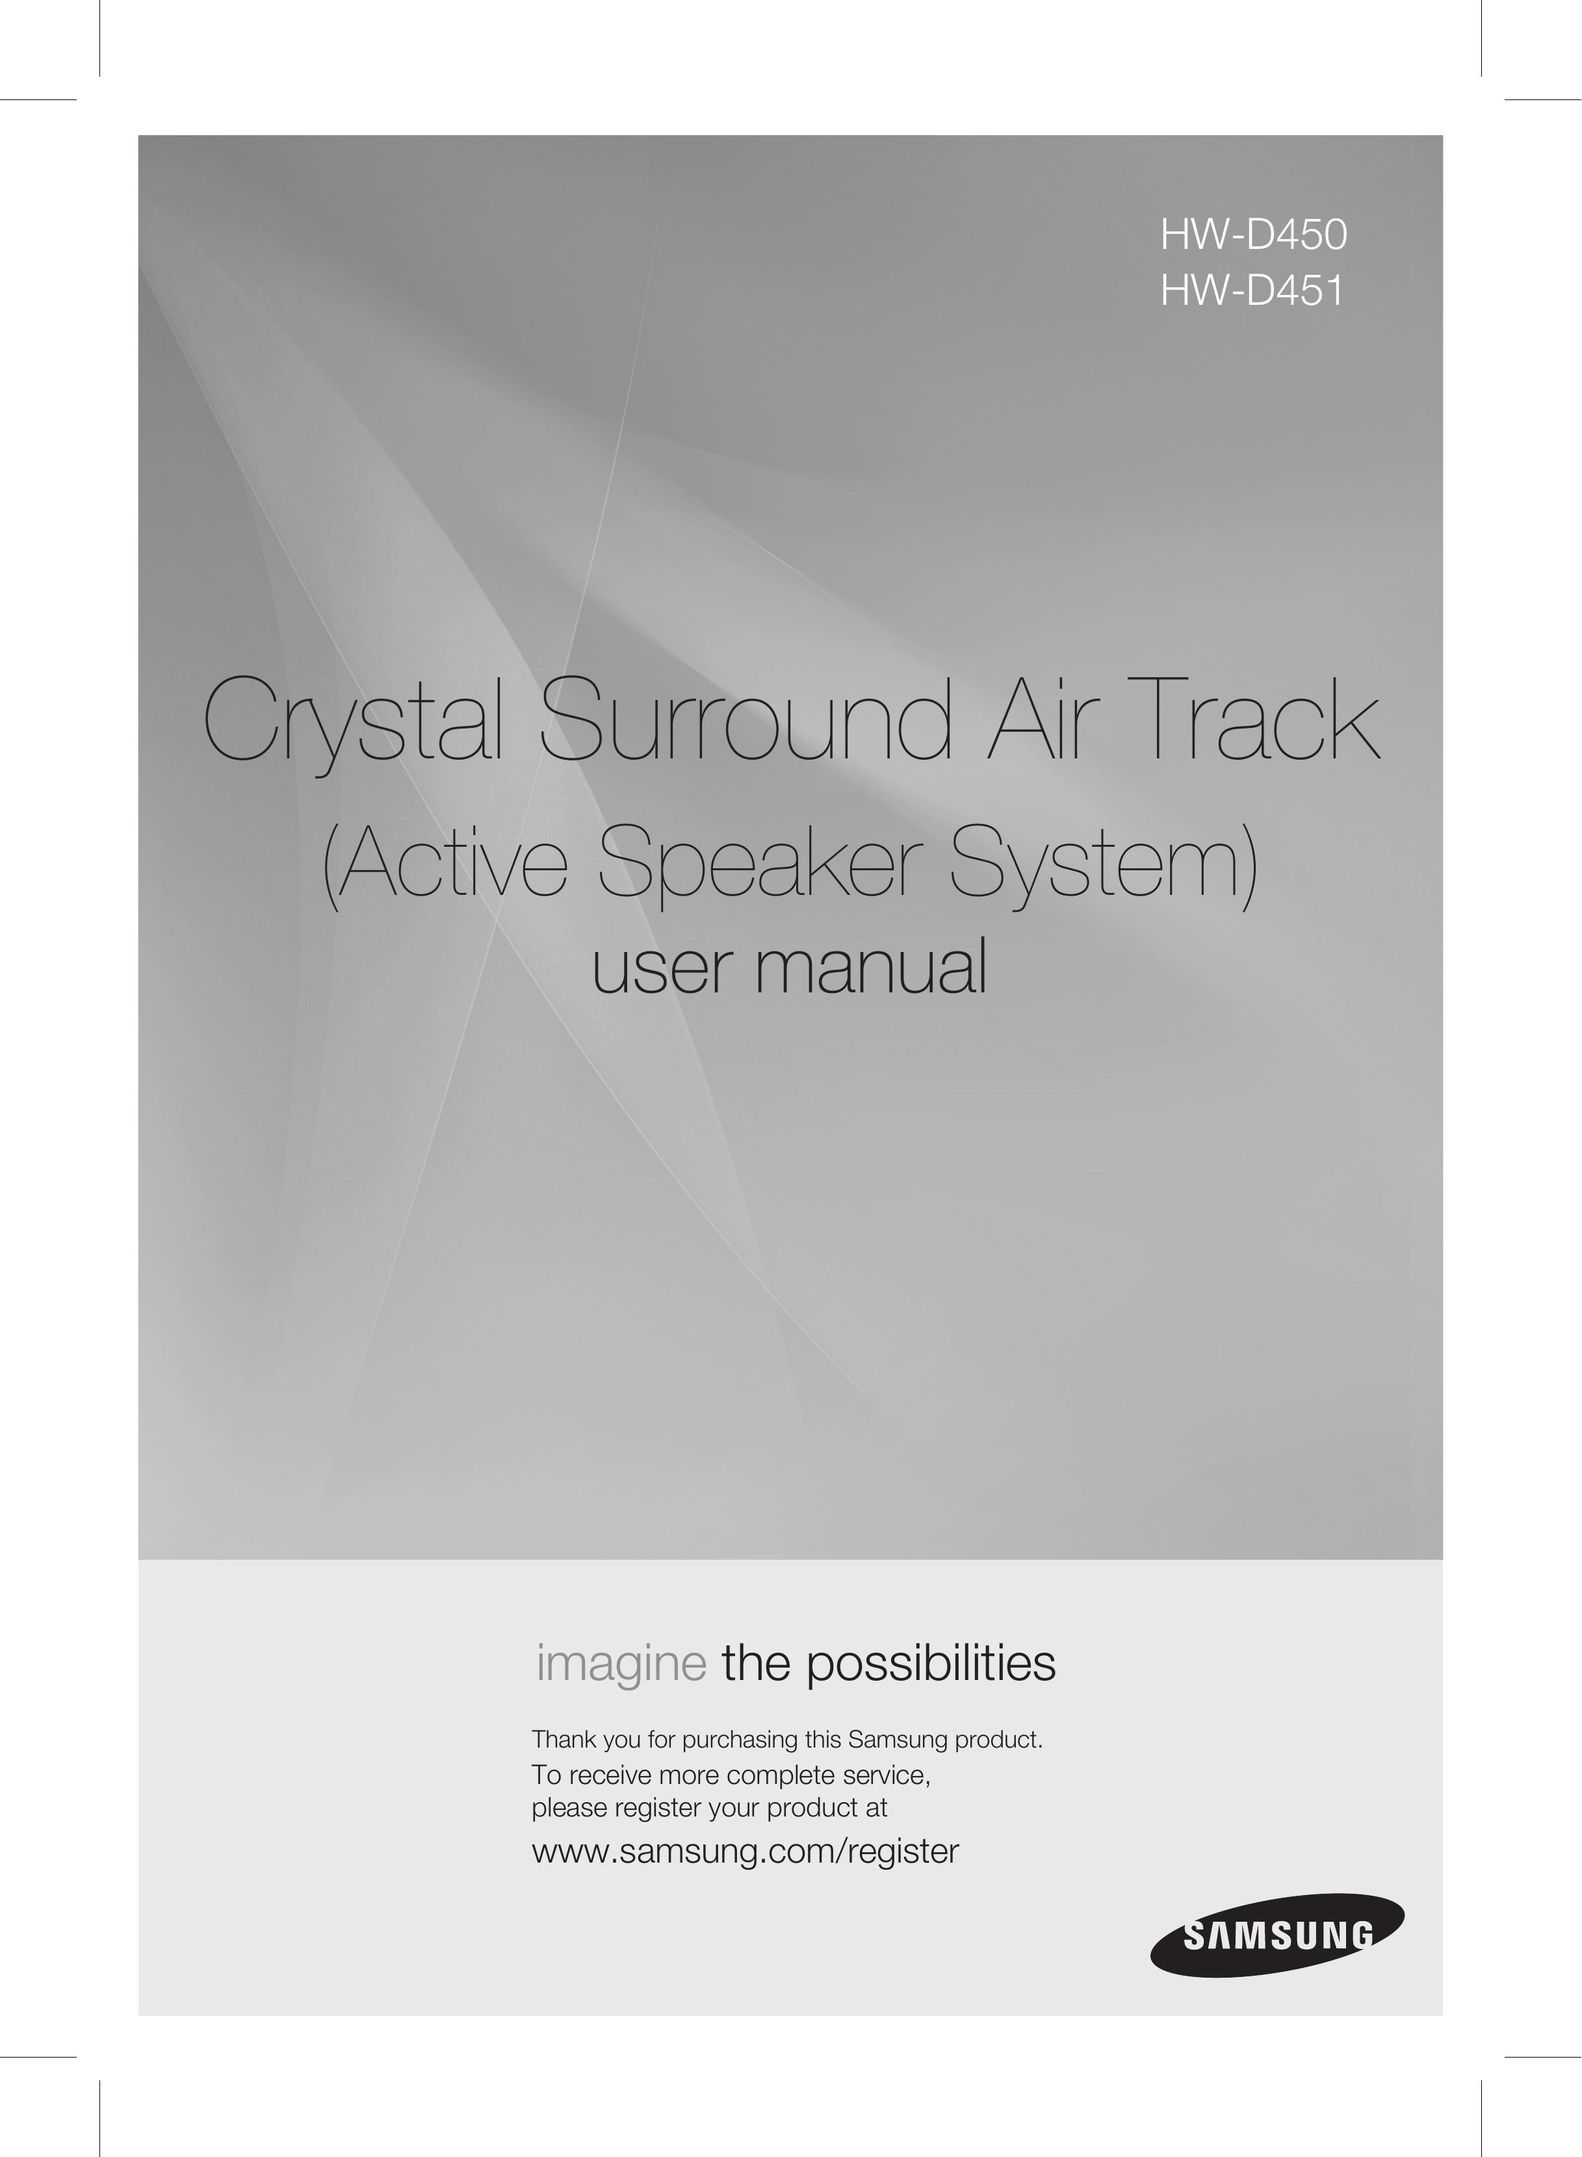 Samsung HW-D450 Speaker System User Manual